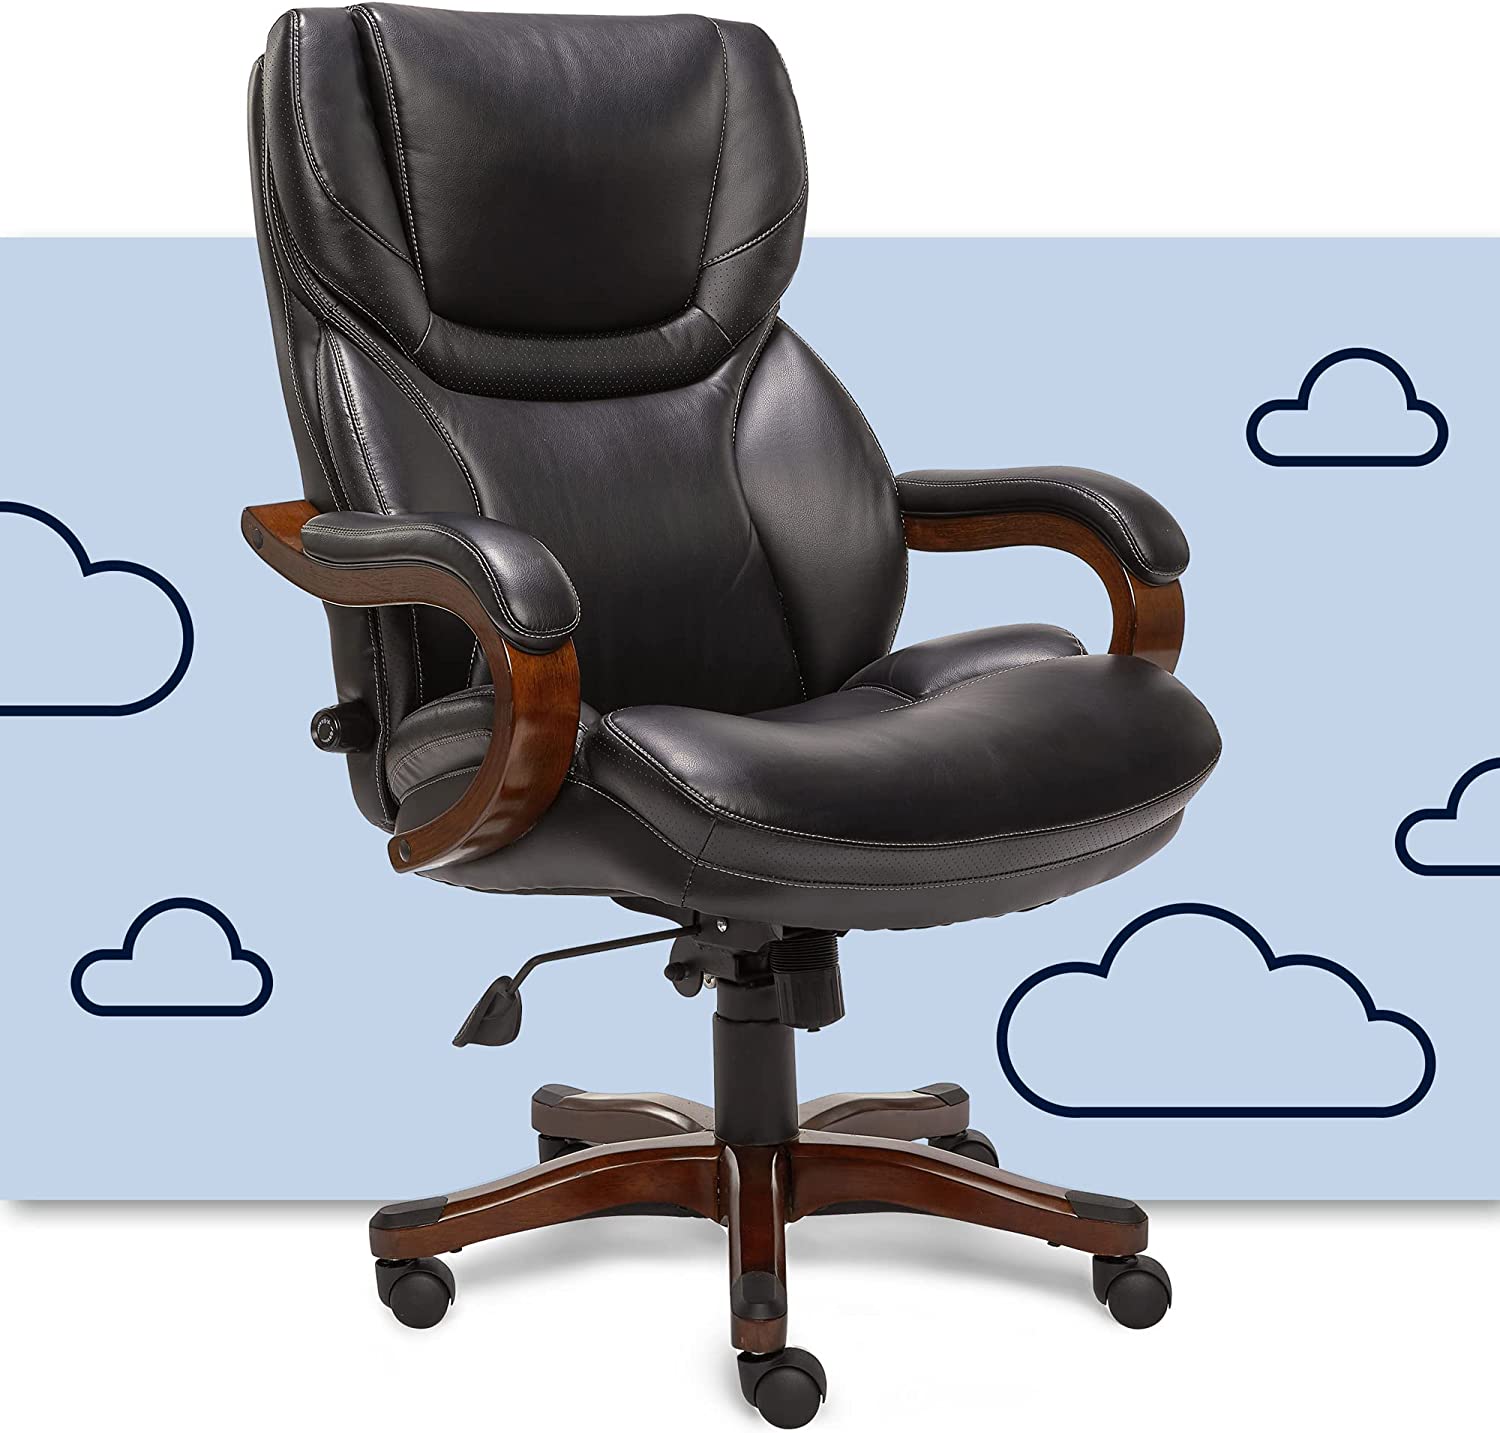 Serta Big & Tall Tilting Cushioned Executive Desk Chair